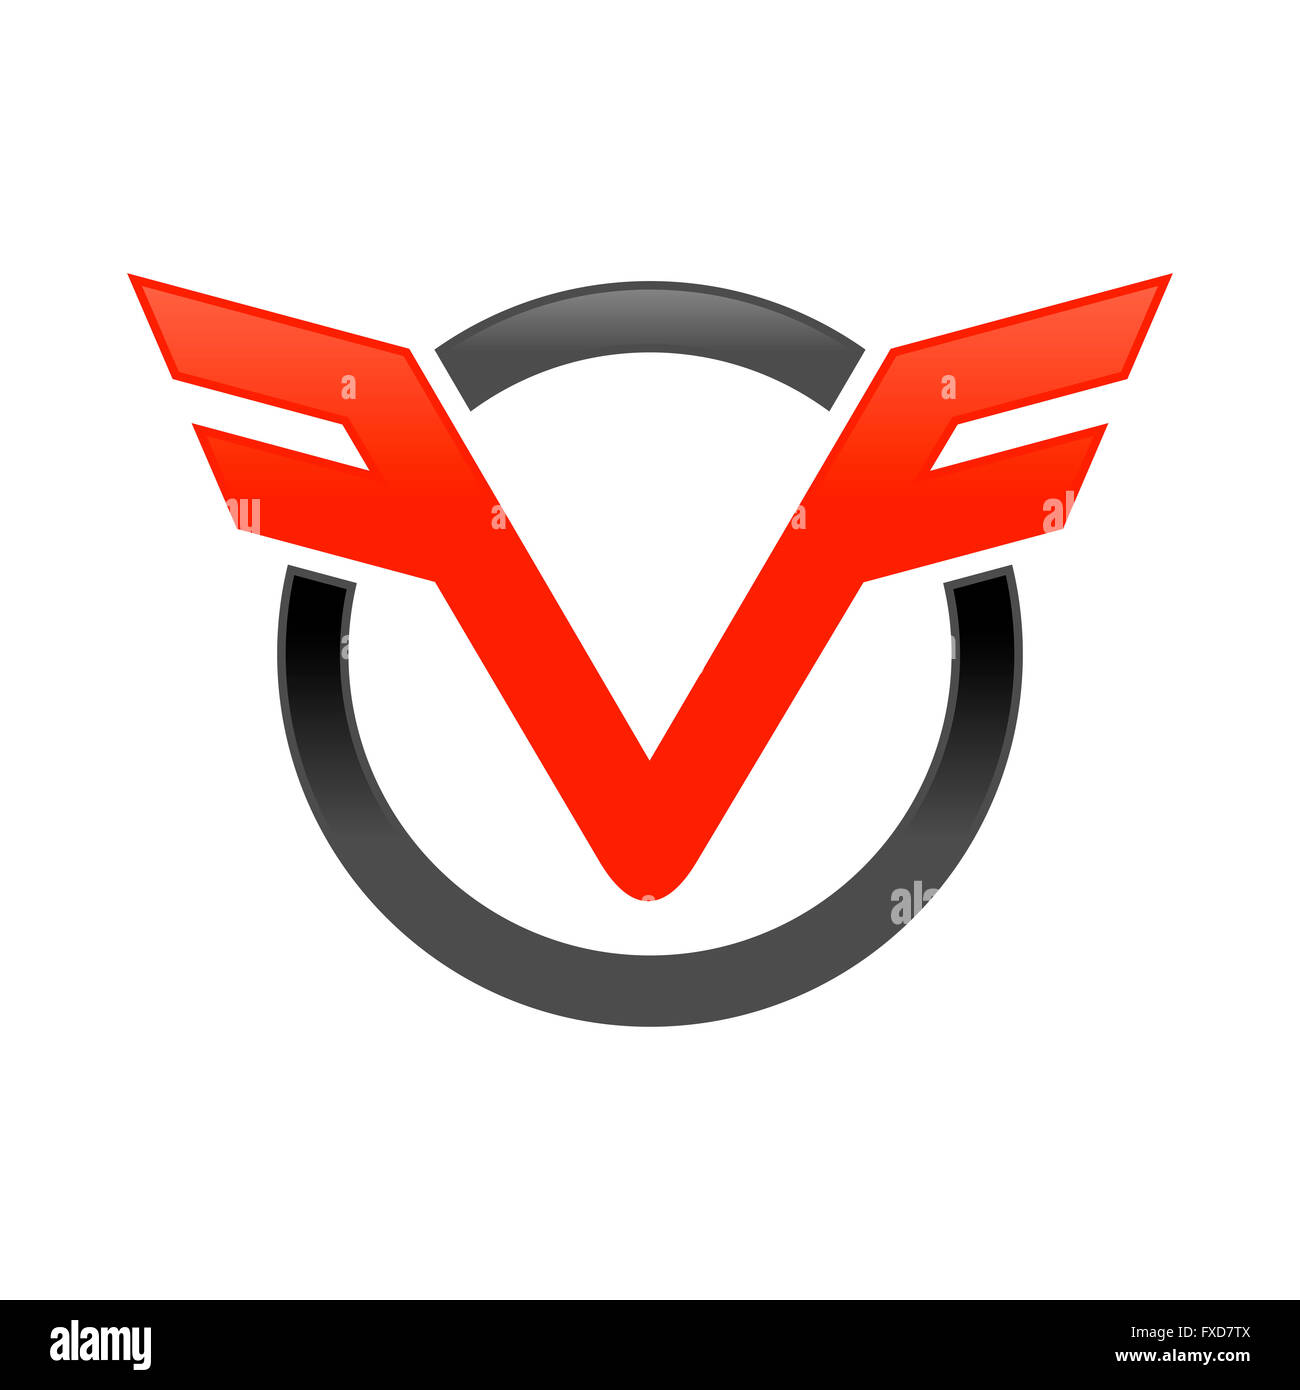 Les ailes de l'aviation les initiales vf Banque D'Images